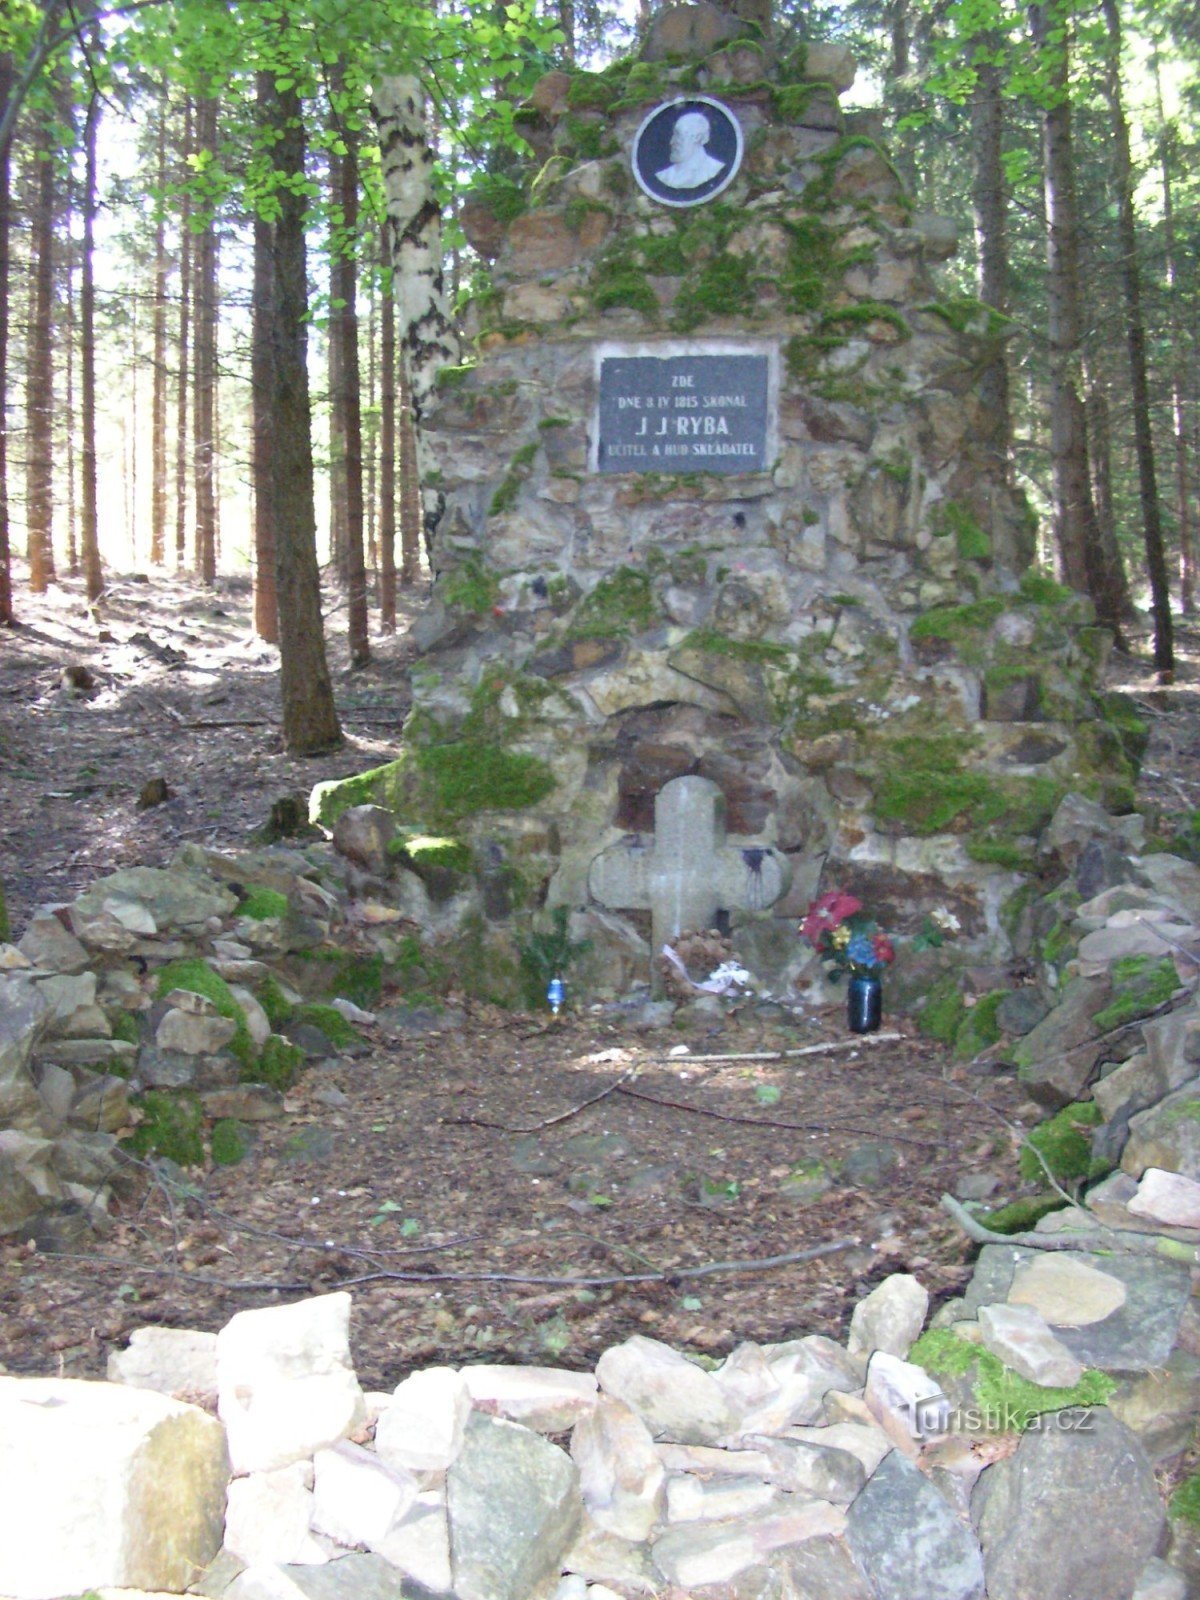 The grave of Jan Jakub Ryba